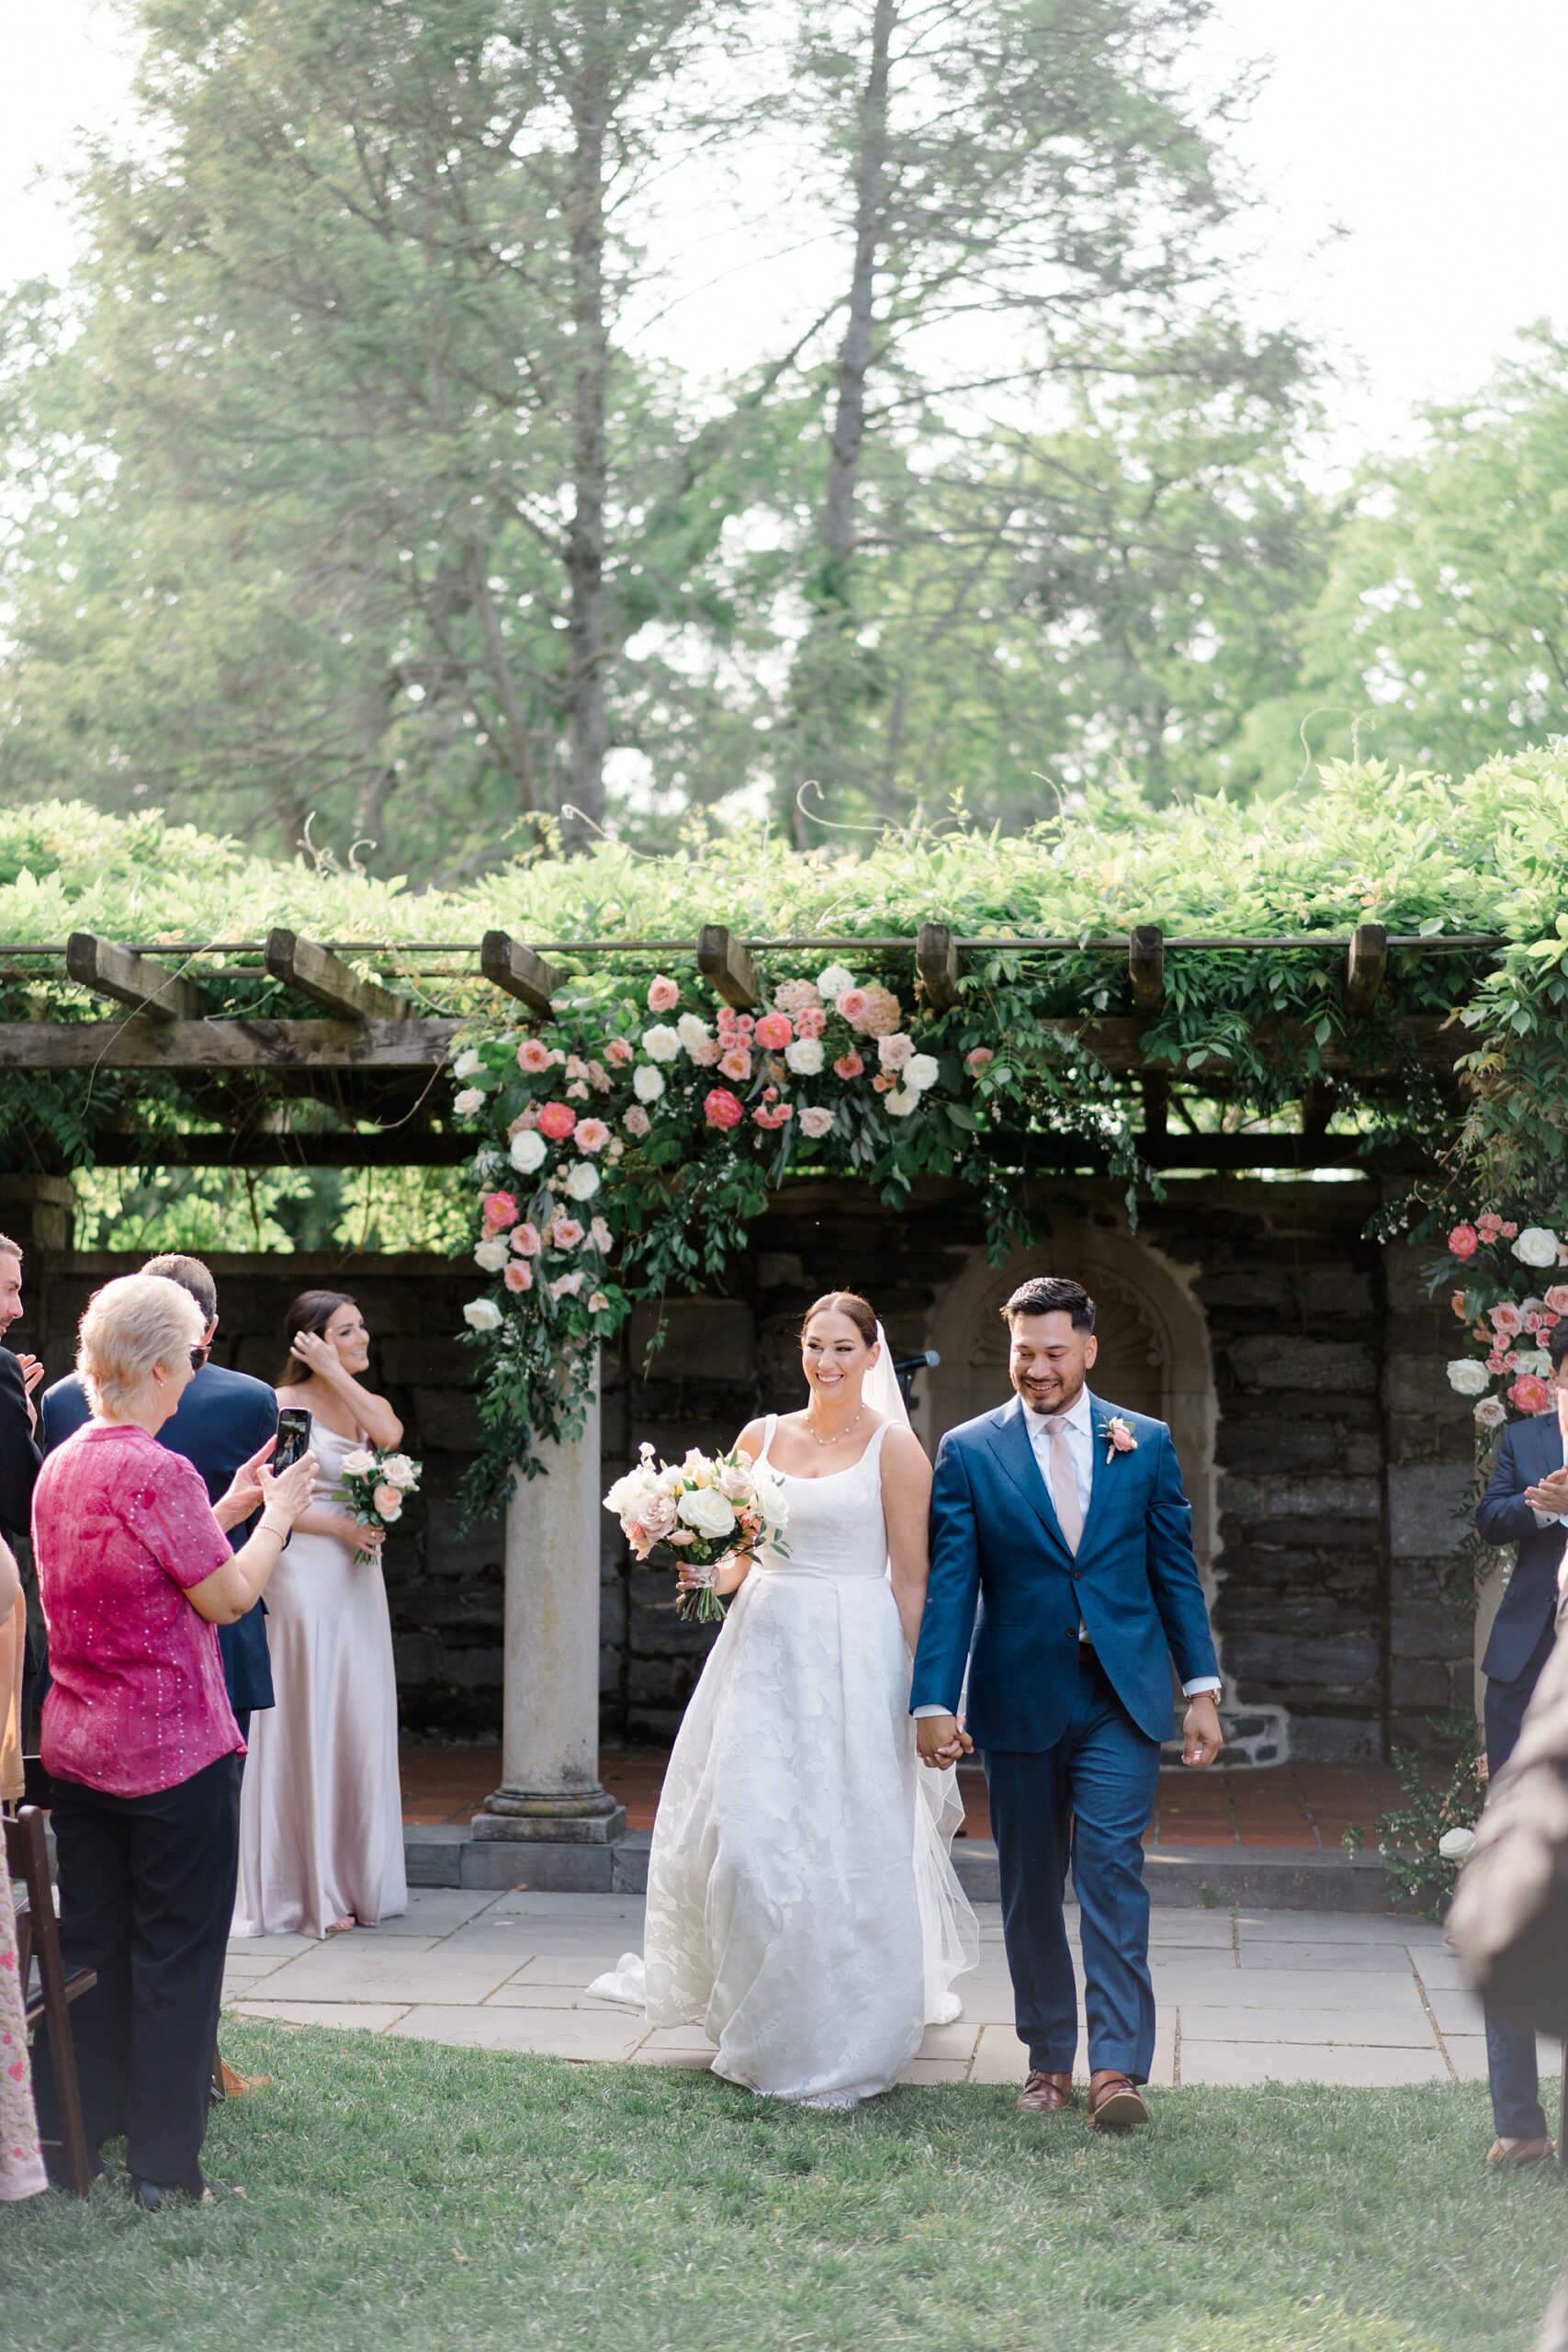 newlyweds exit outdoor wedding ceremony at Curtis Arboretum